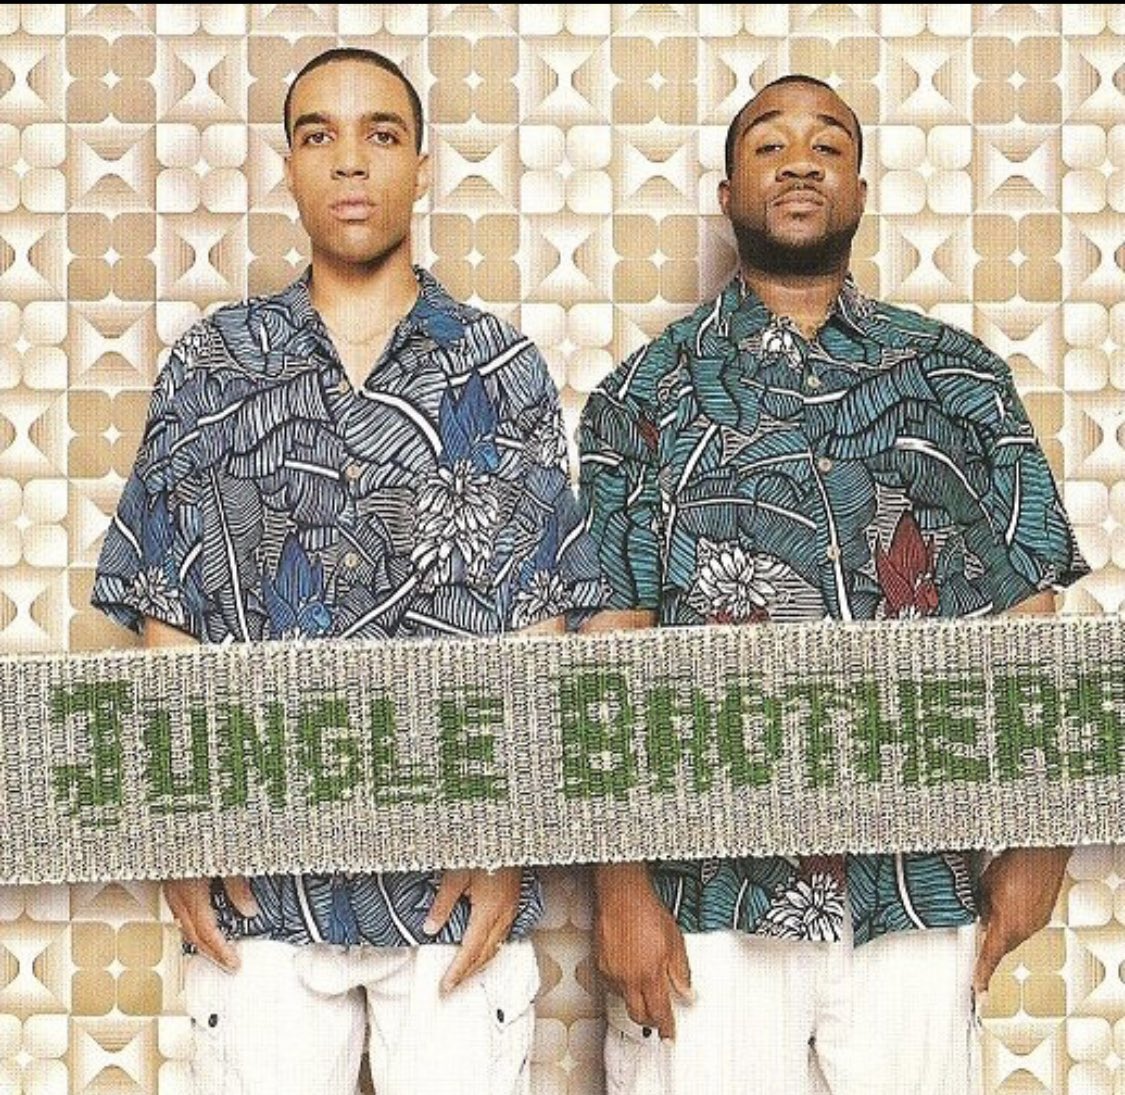 Big up @JungleBros4Life and their 5th album #HipHop #JungleBrothers